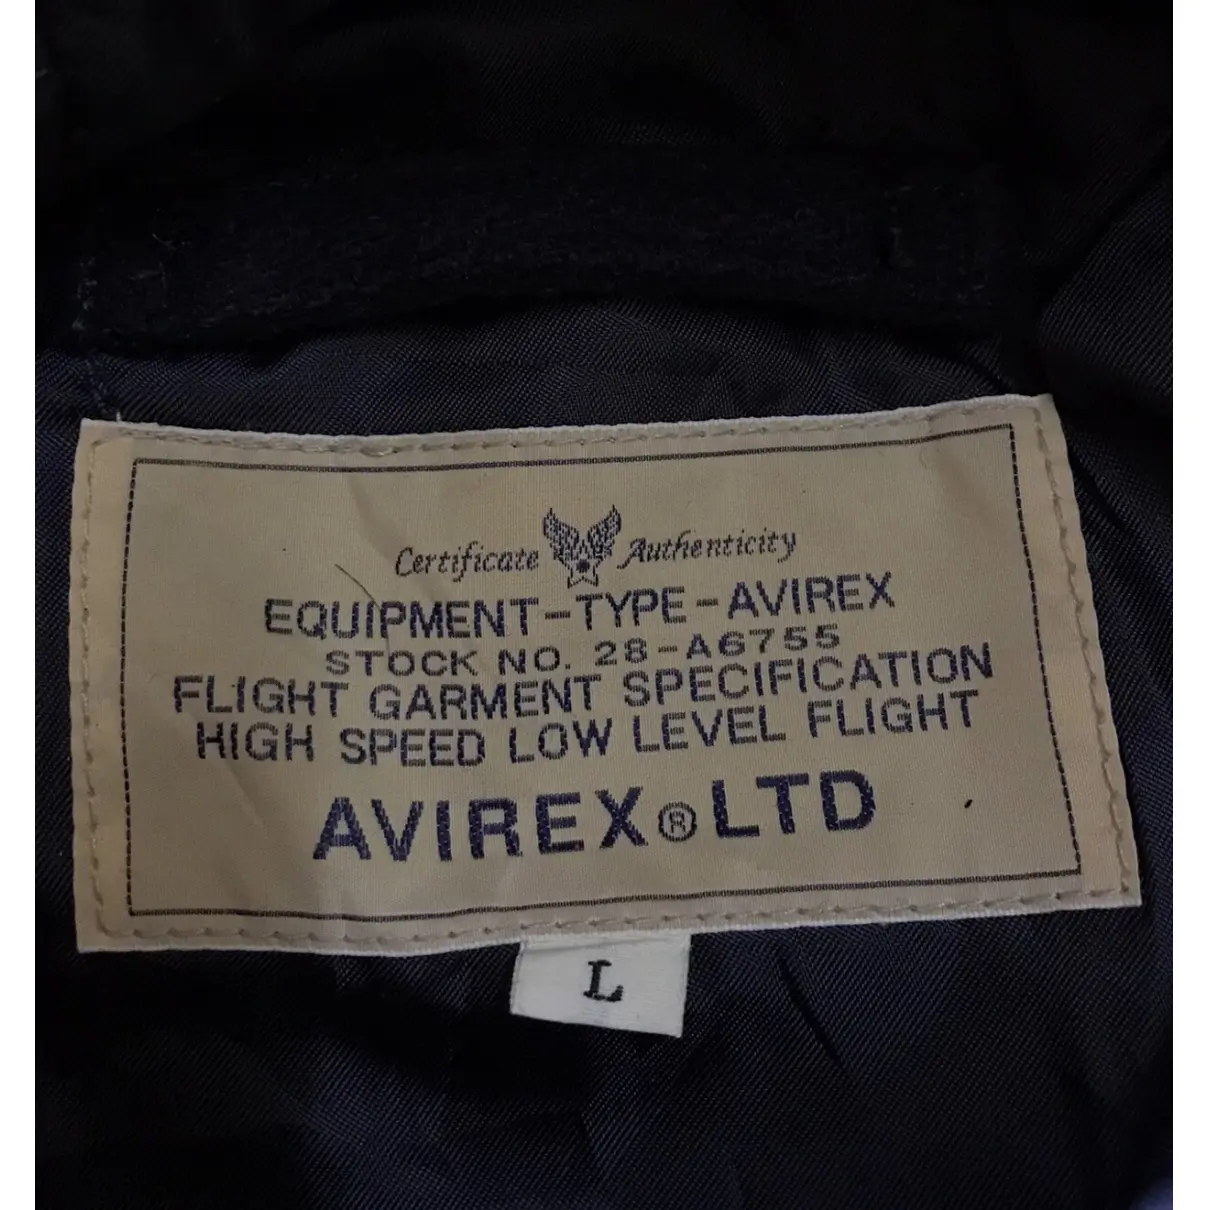 Buy Avirex Leather jacket online